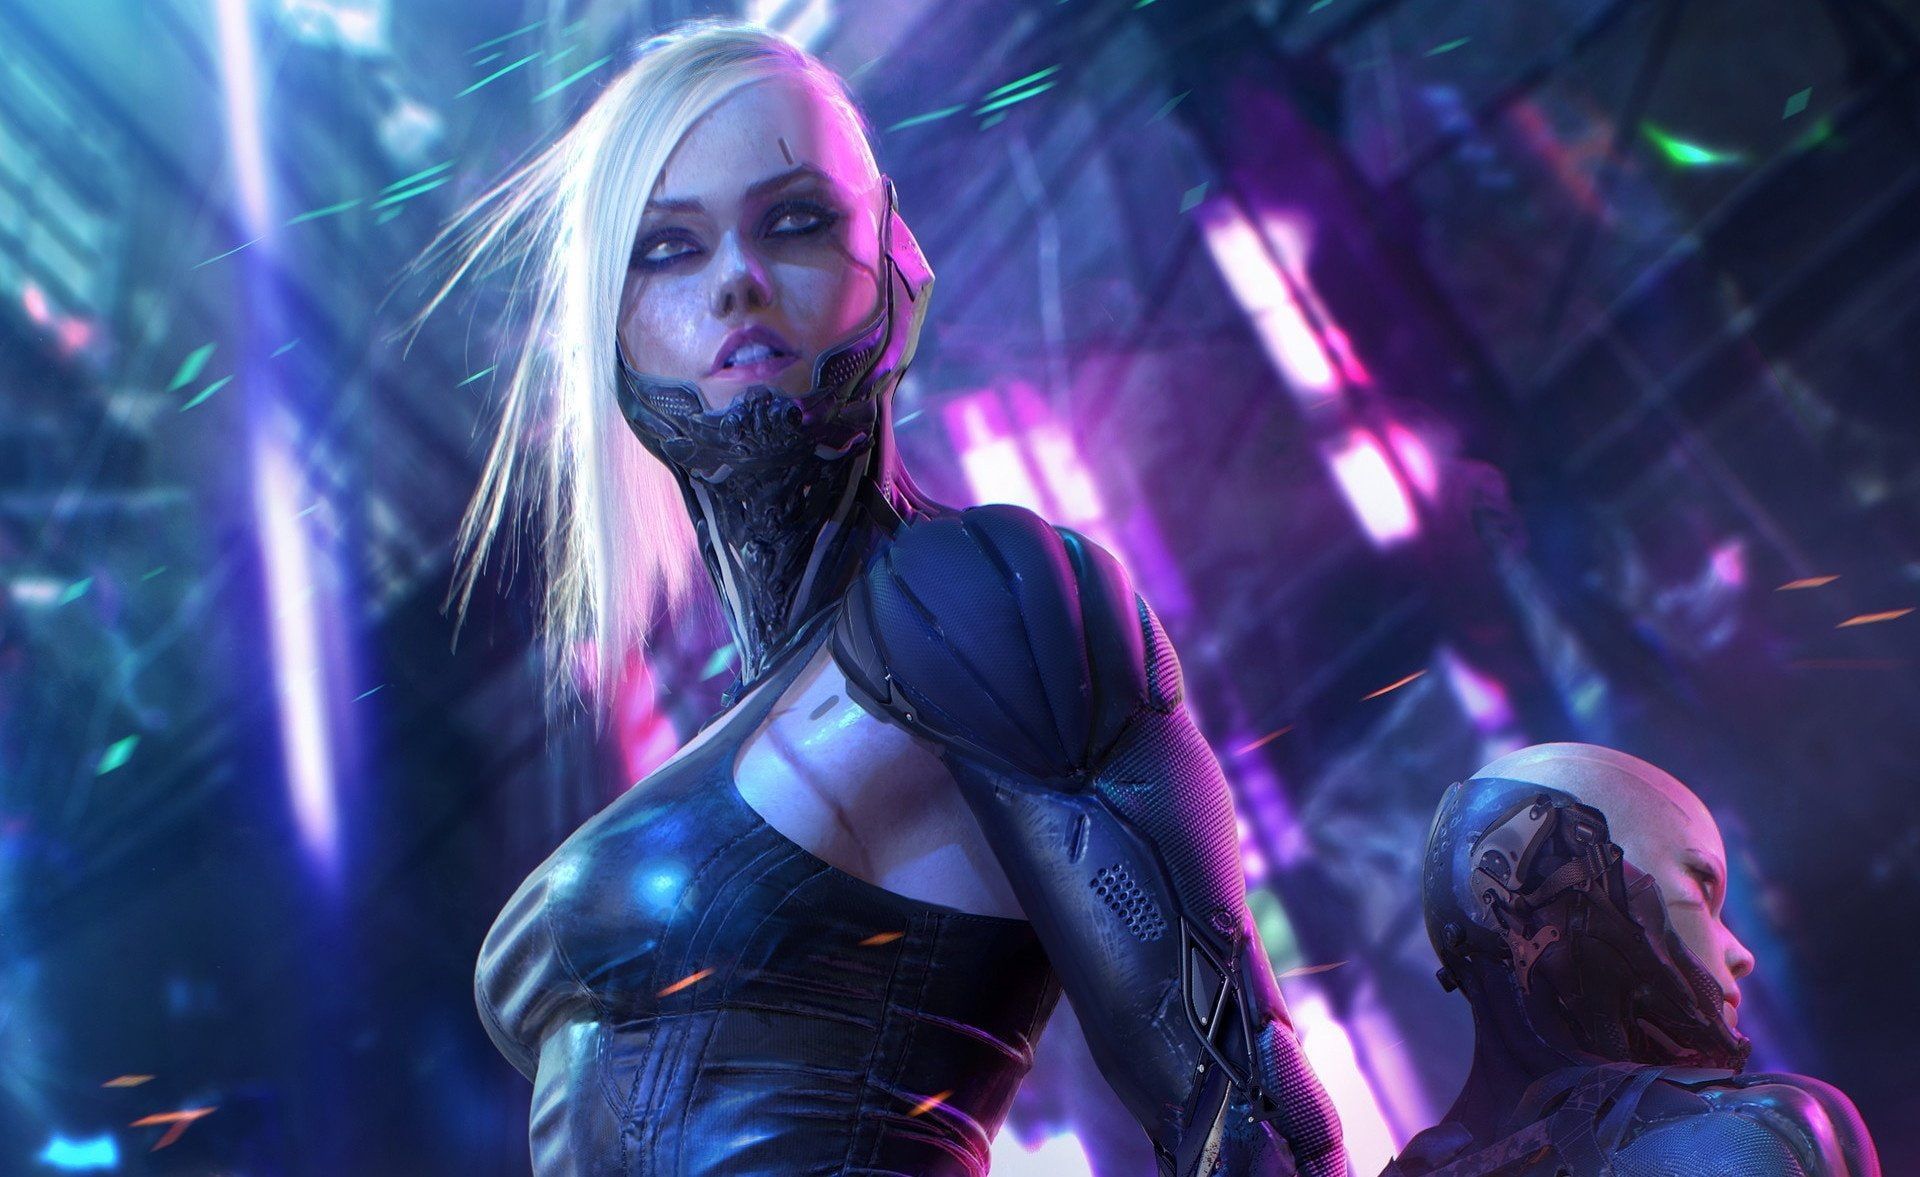 Sci Fi #Cyberpunk #Blonde #Cyborg #Girl #Woman P #wallpaper #hdwallpaper #desktop. Cyberpunk, Cyberpunk girl, Female cyborg